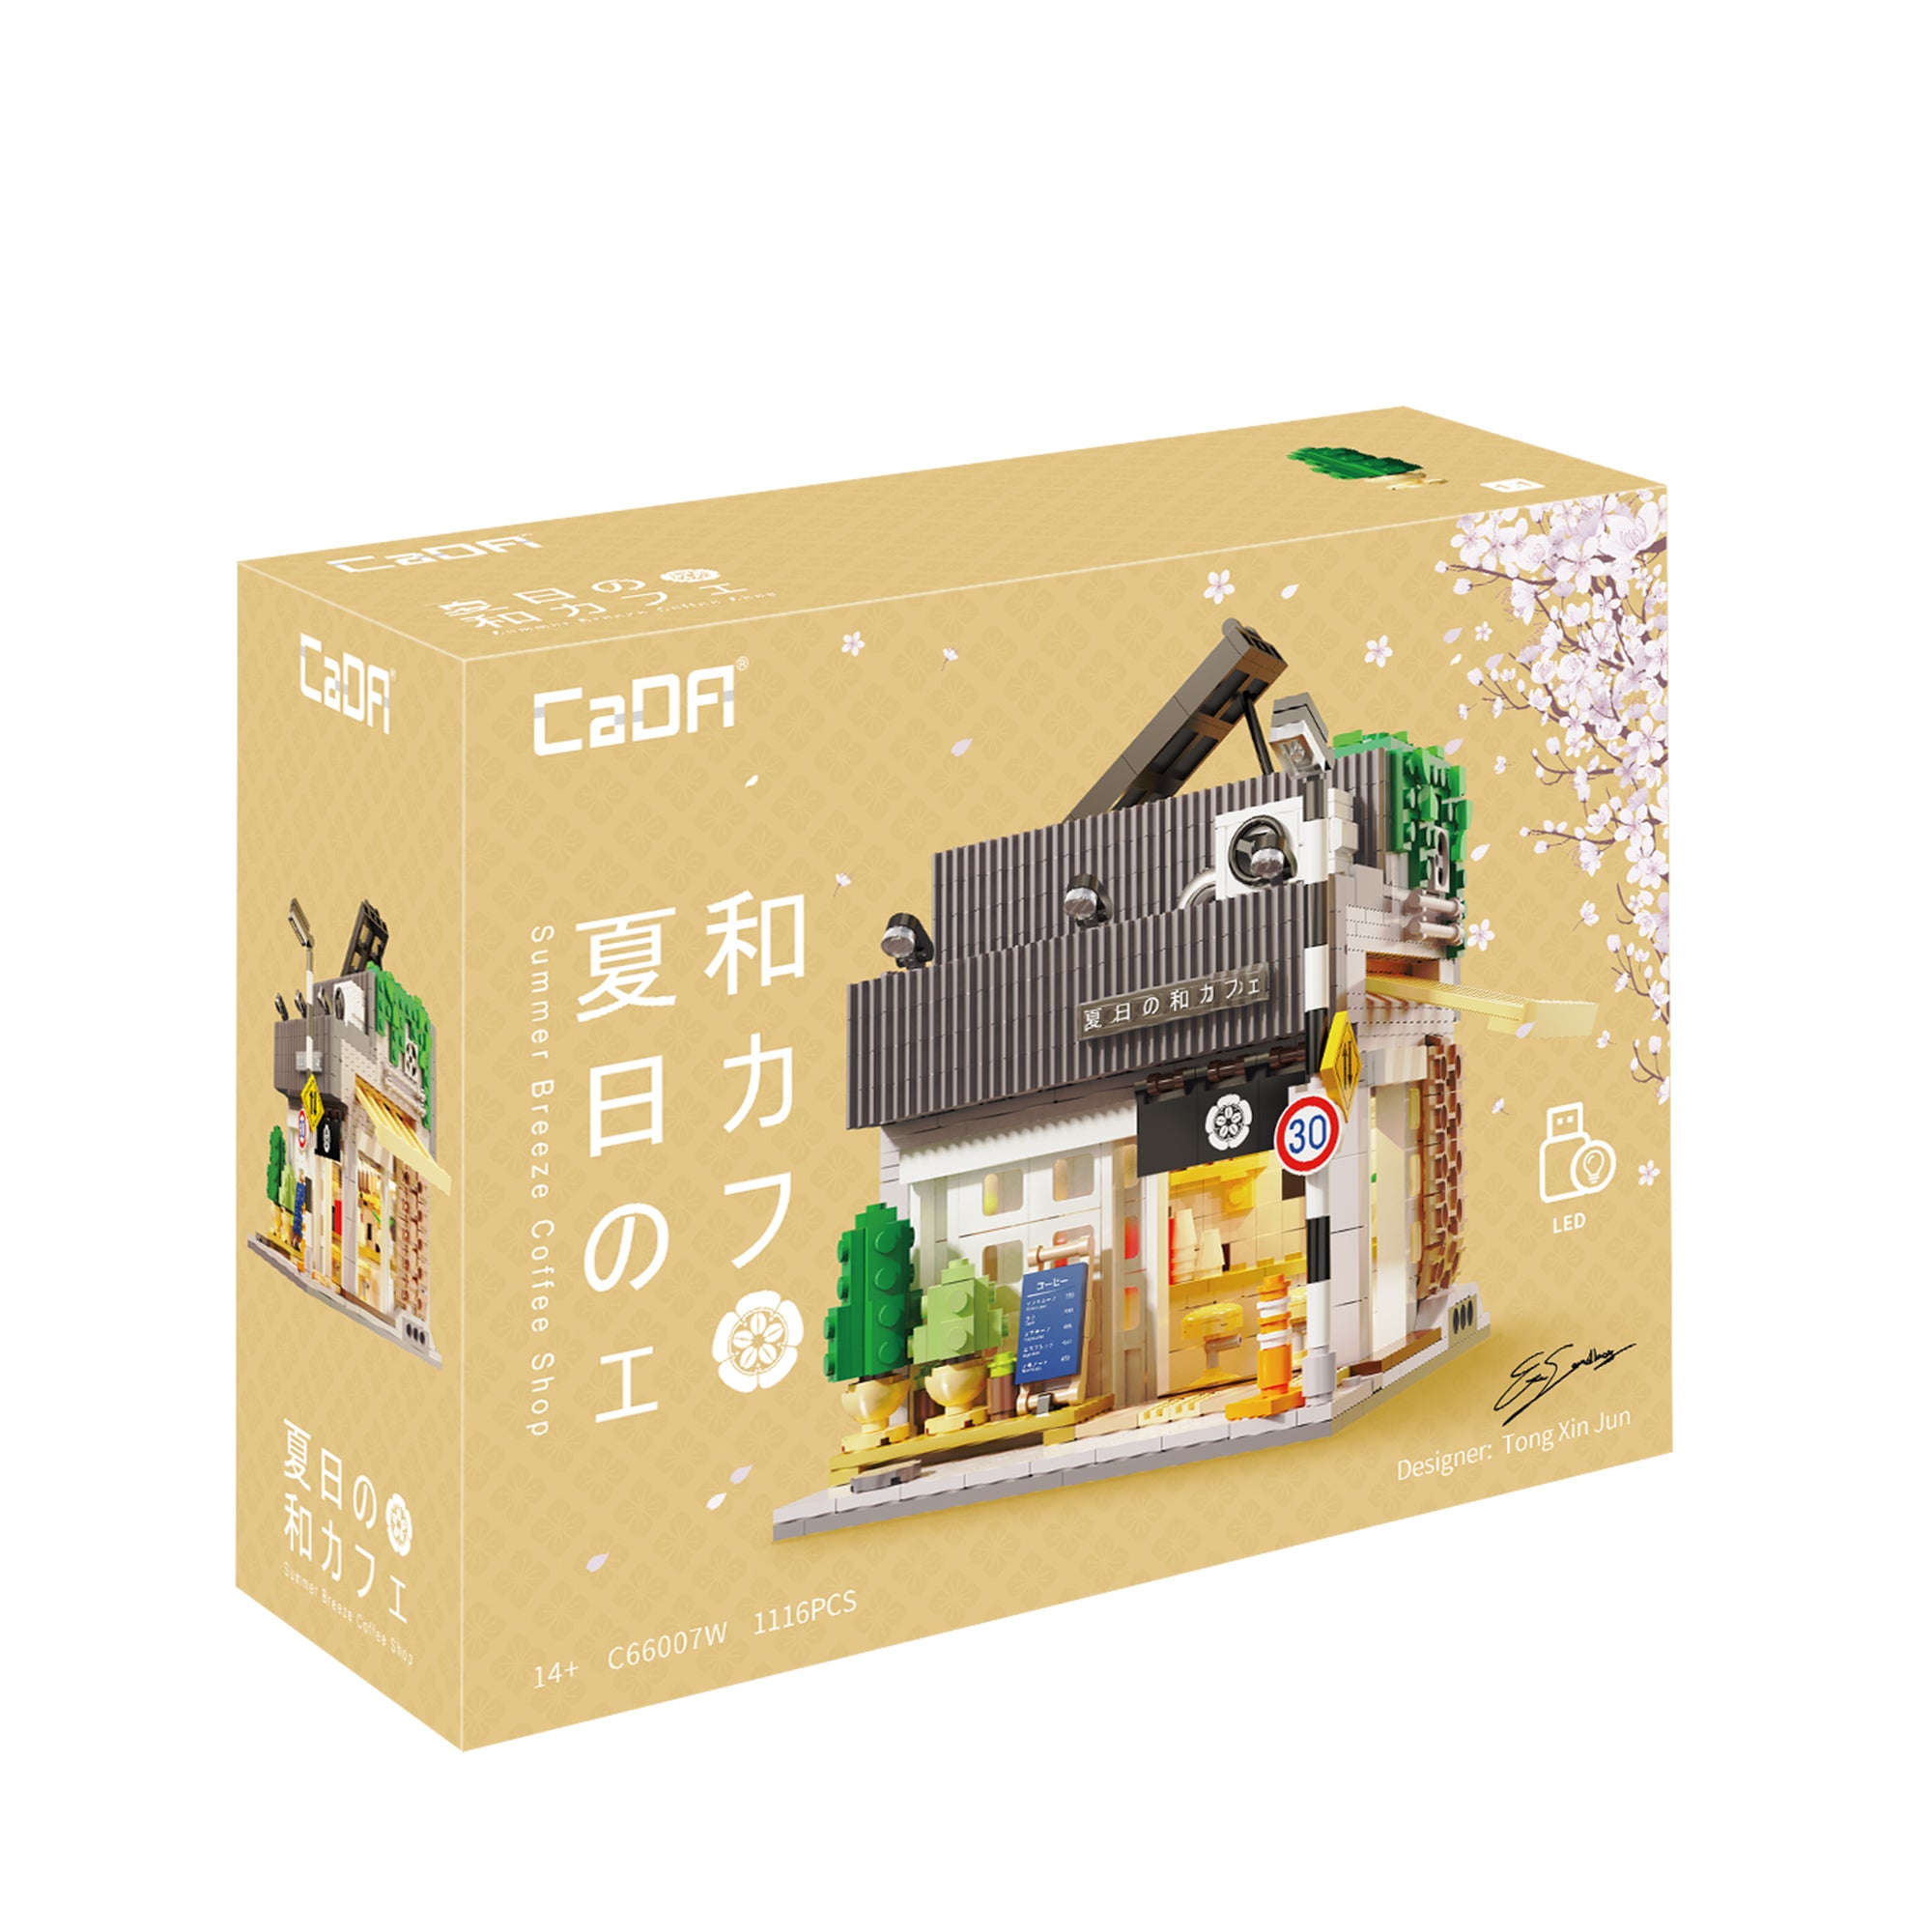 CaDA Japanese Summer Coffee House C66007W